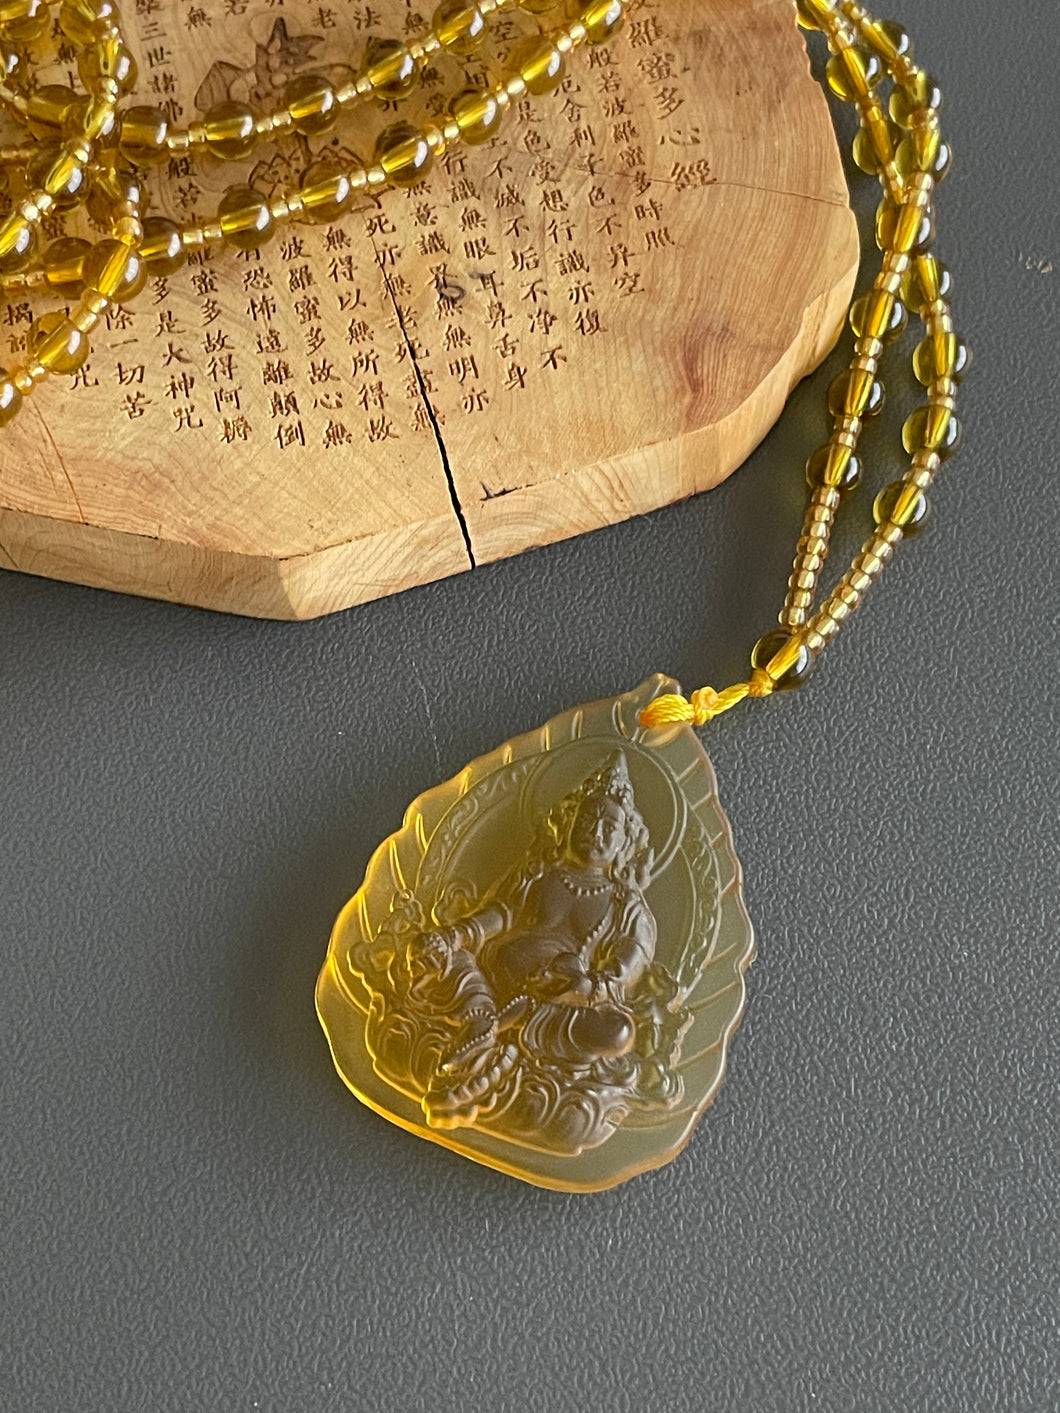 Jambhala yellow glass necklace mala ZB35